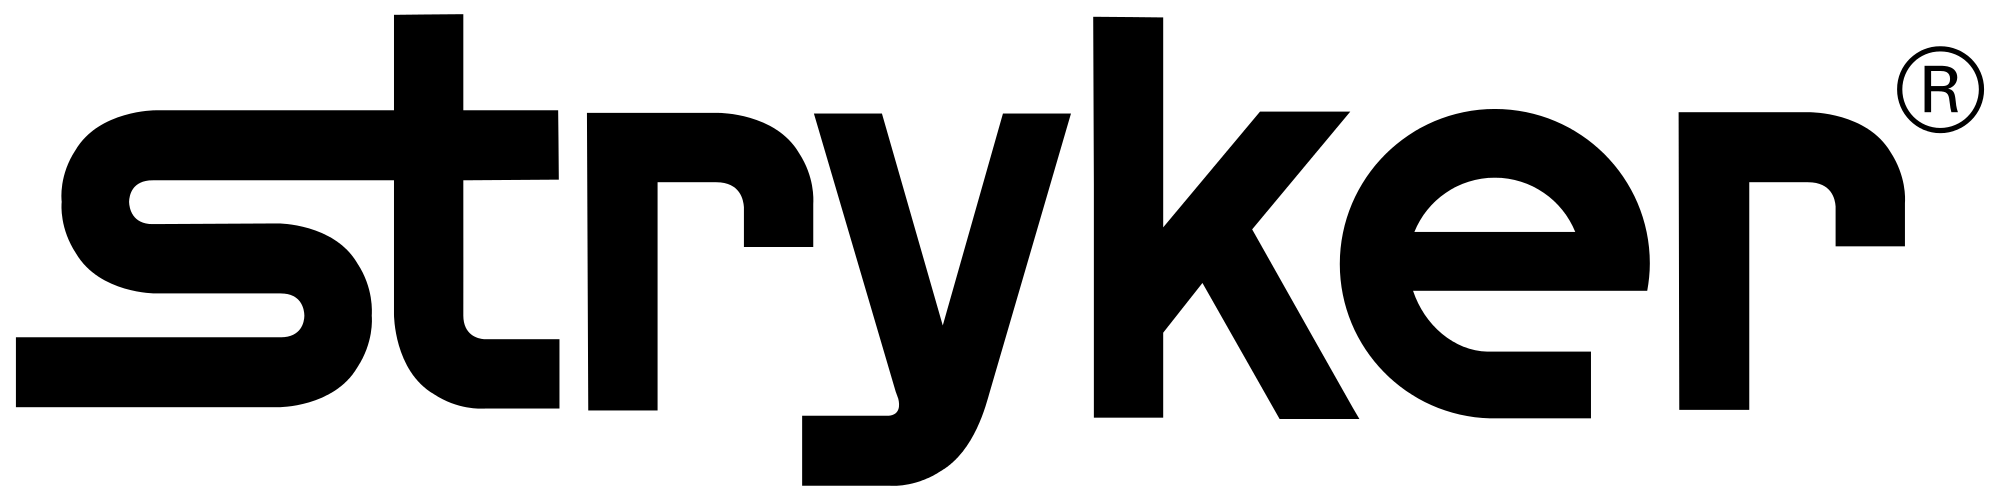 Stryker Logo - File:Stryker Corporation logo.svg - Wikimedia Commons